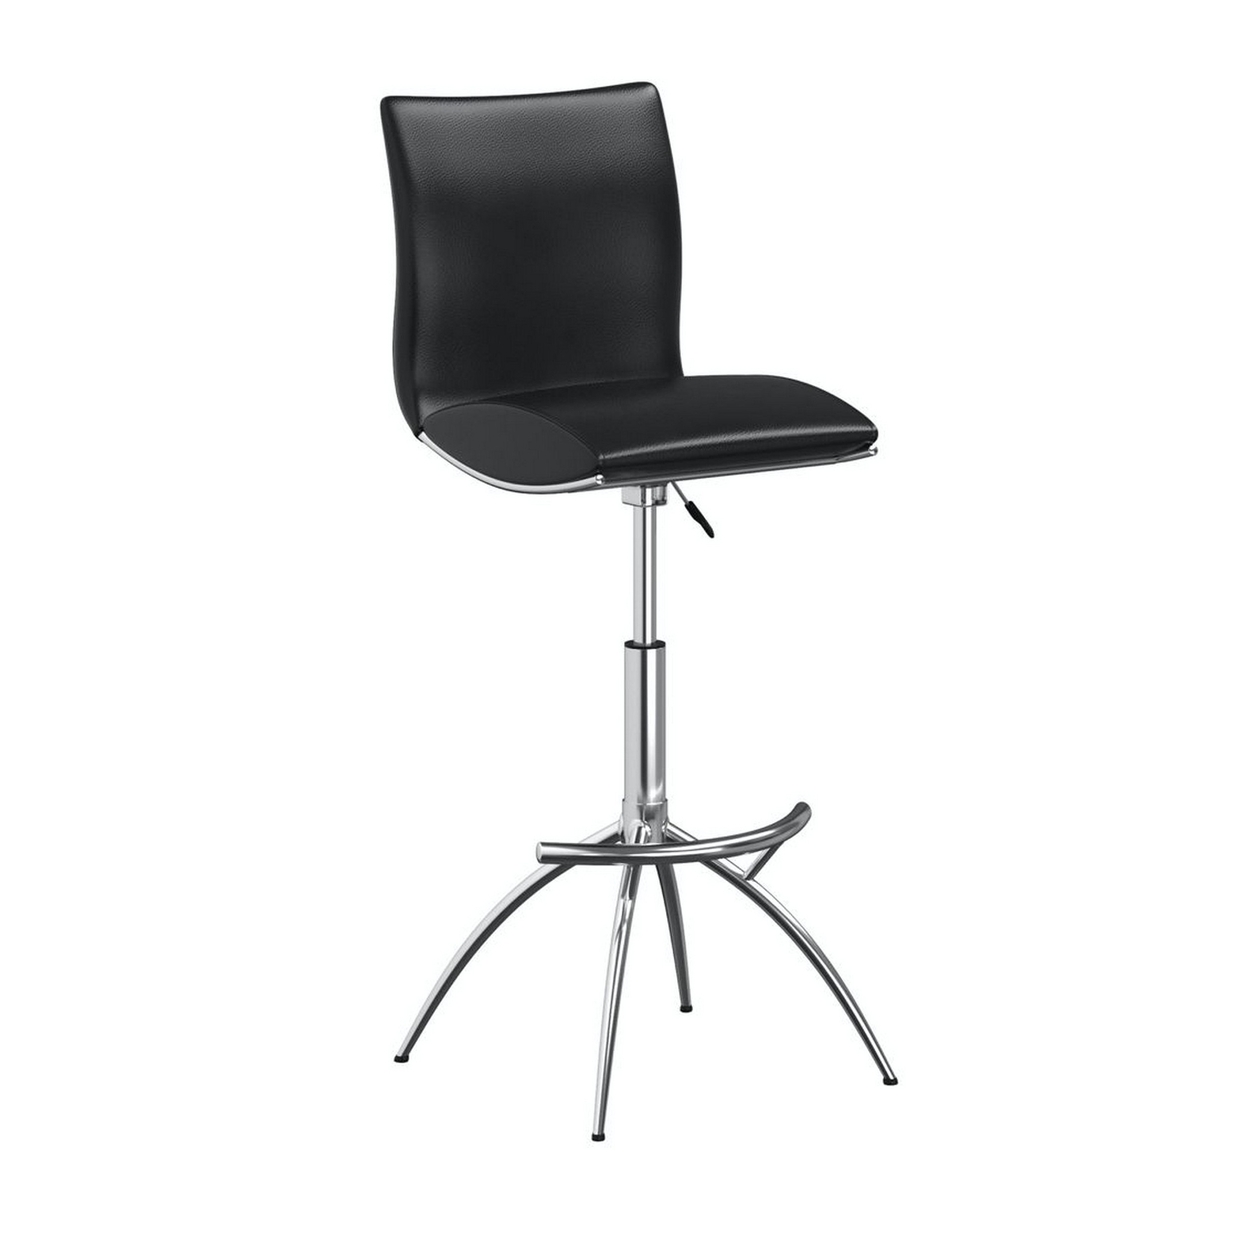 Deko 26-31 Inch Adjustable Height Barstool Chair, Set Of 2, Chrome Black Faux Leather - Saltoro Sherpi